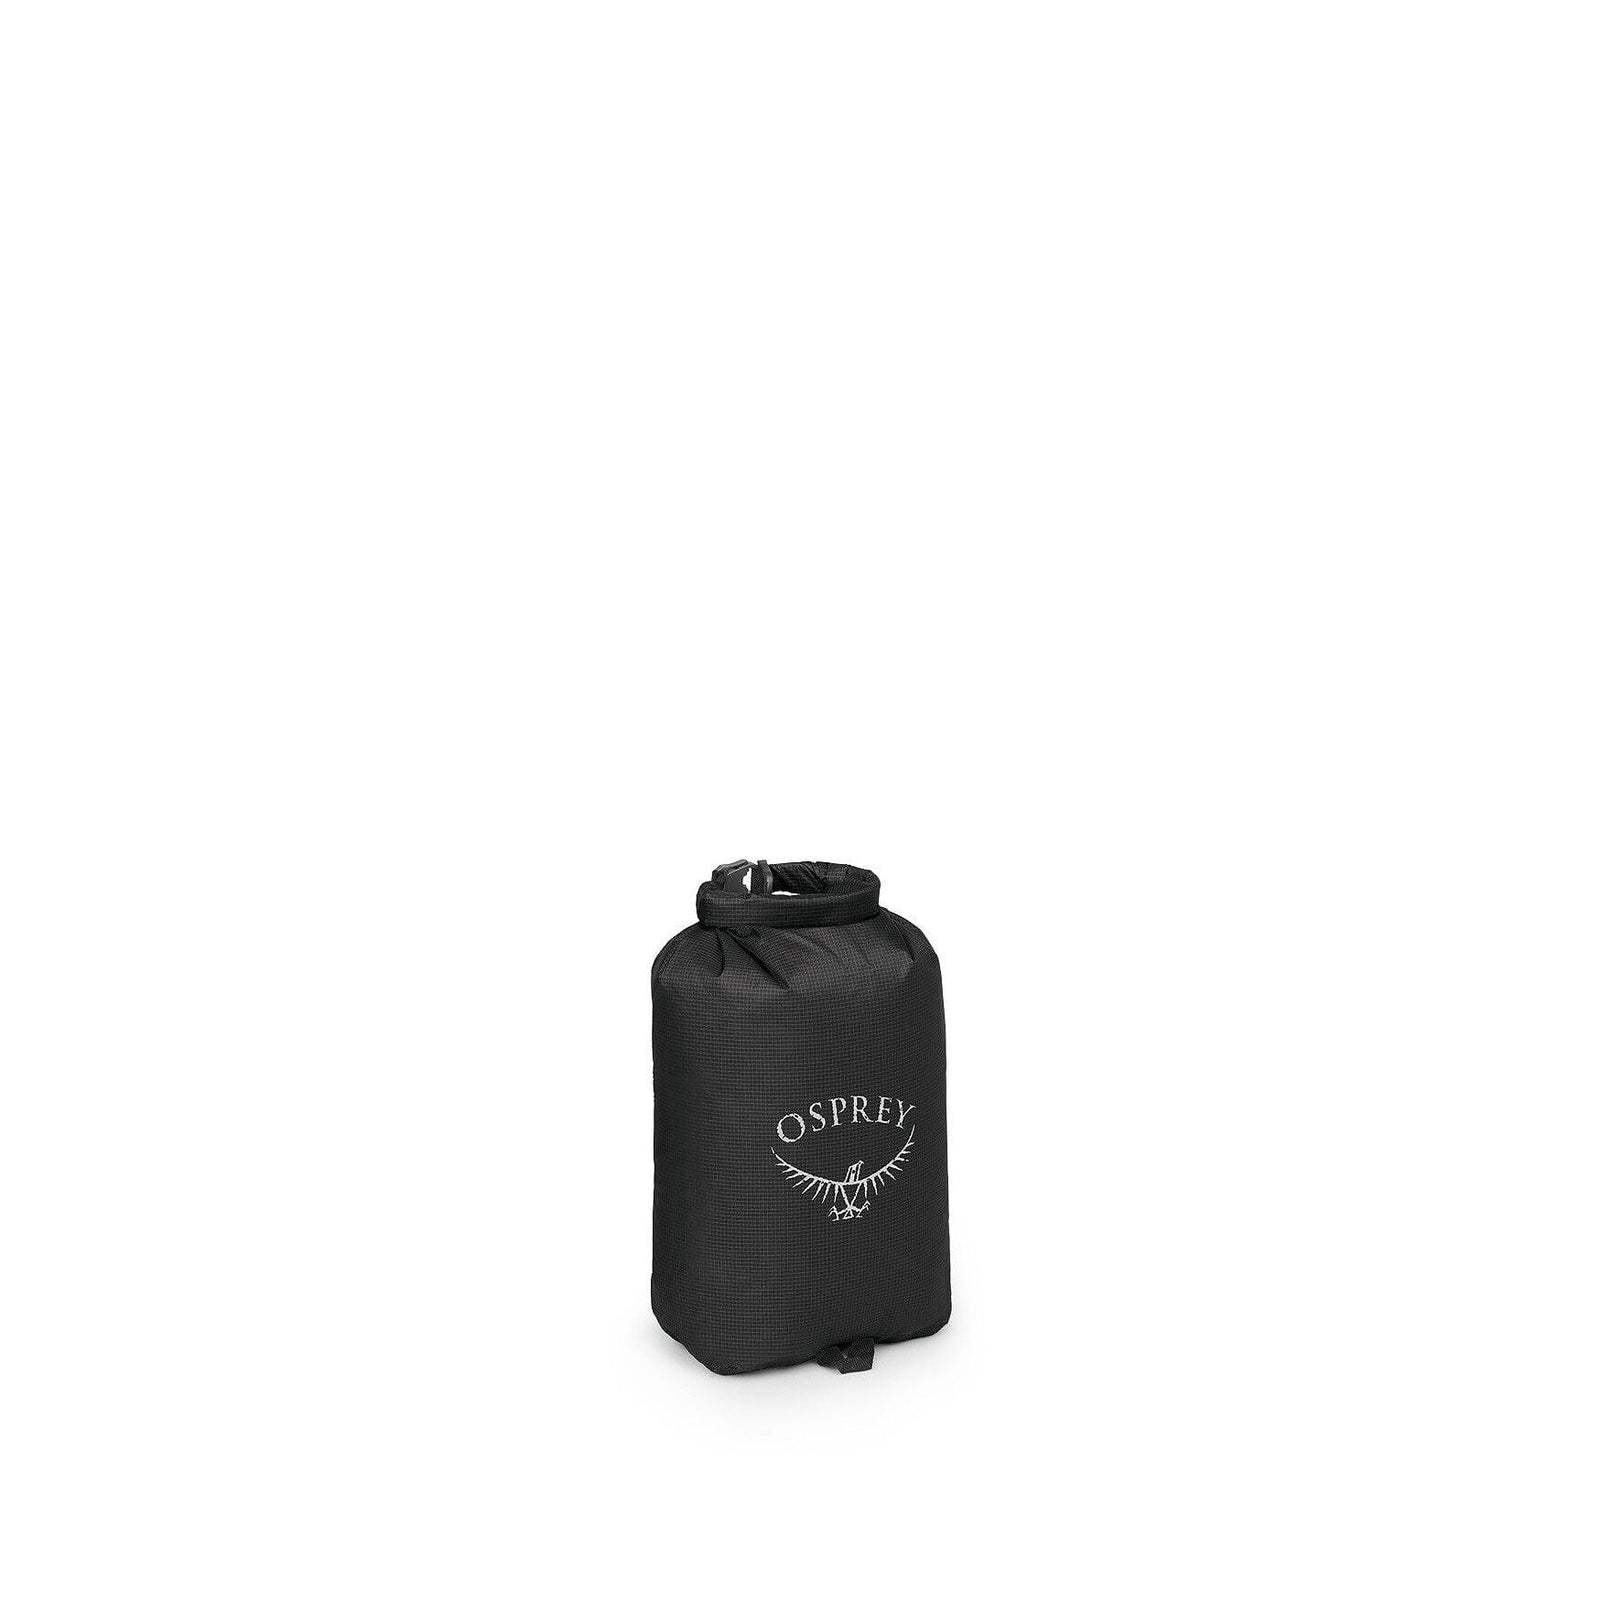 Osprey Ultralight Dry Sack 6 Litre - Waterproof Stuff Sack Black (S24) 